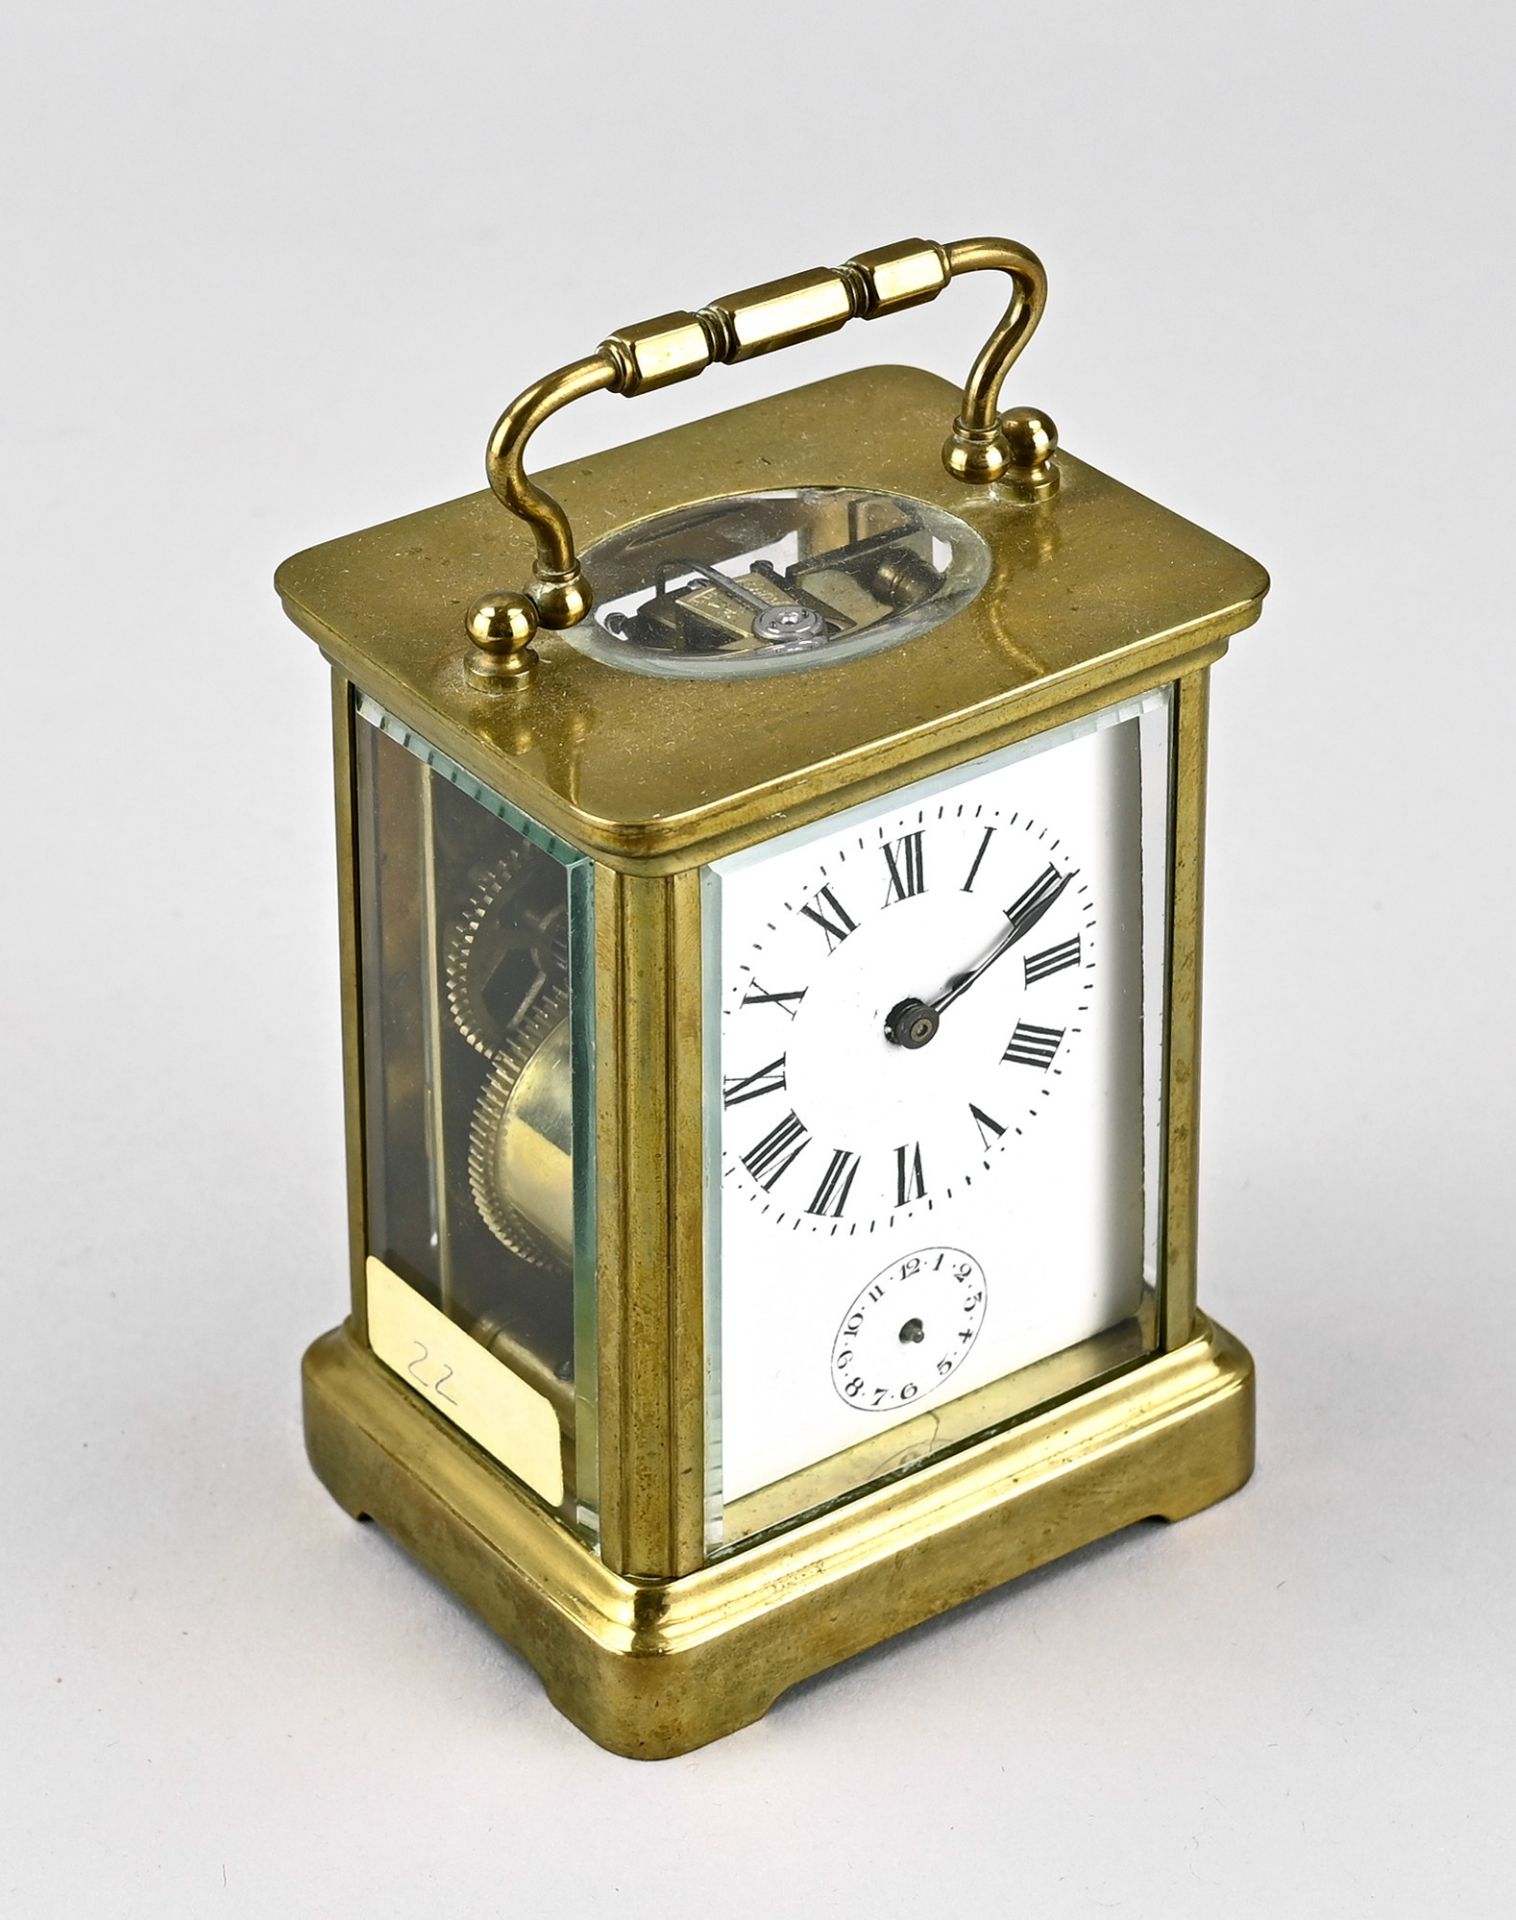 French travel alarm clock, 1900